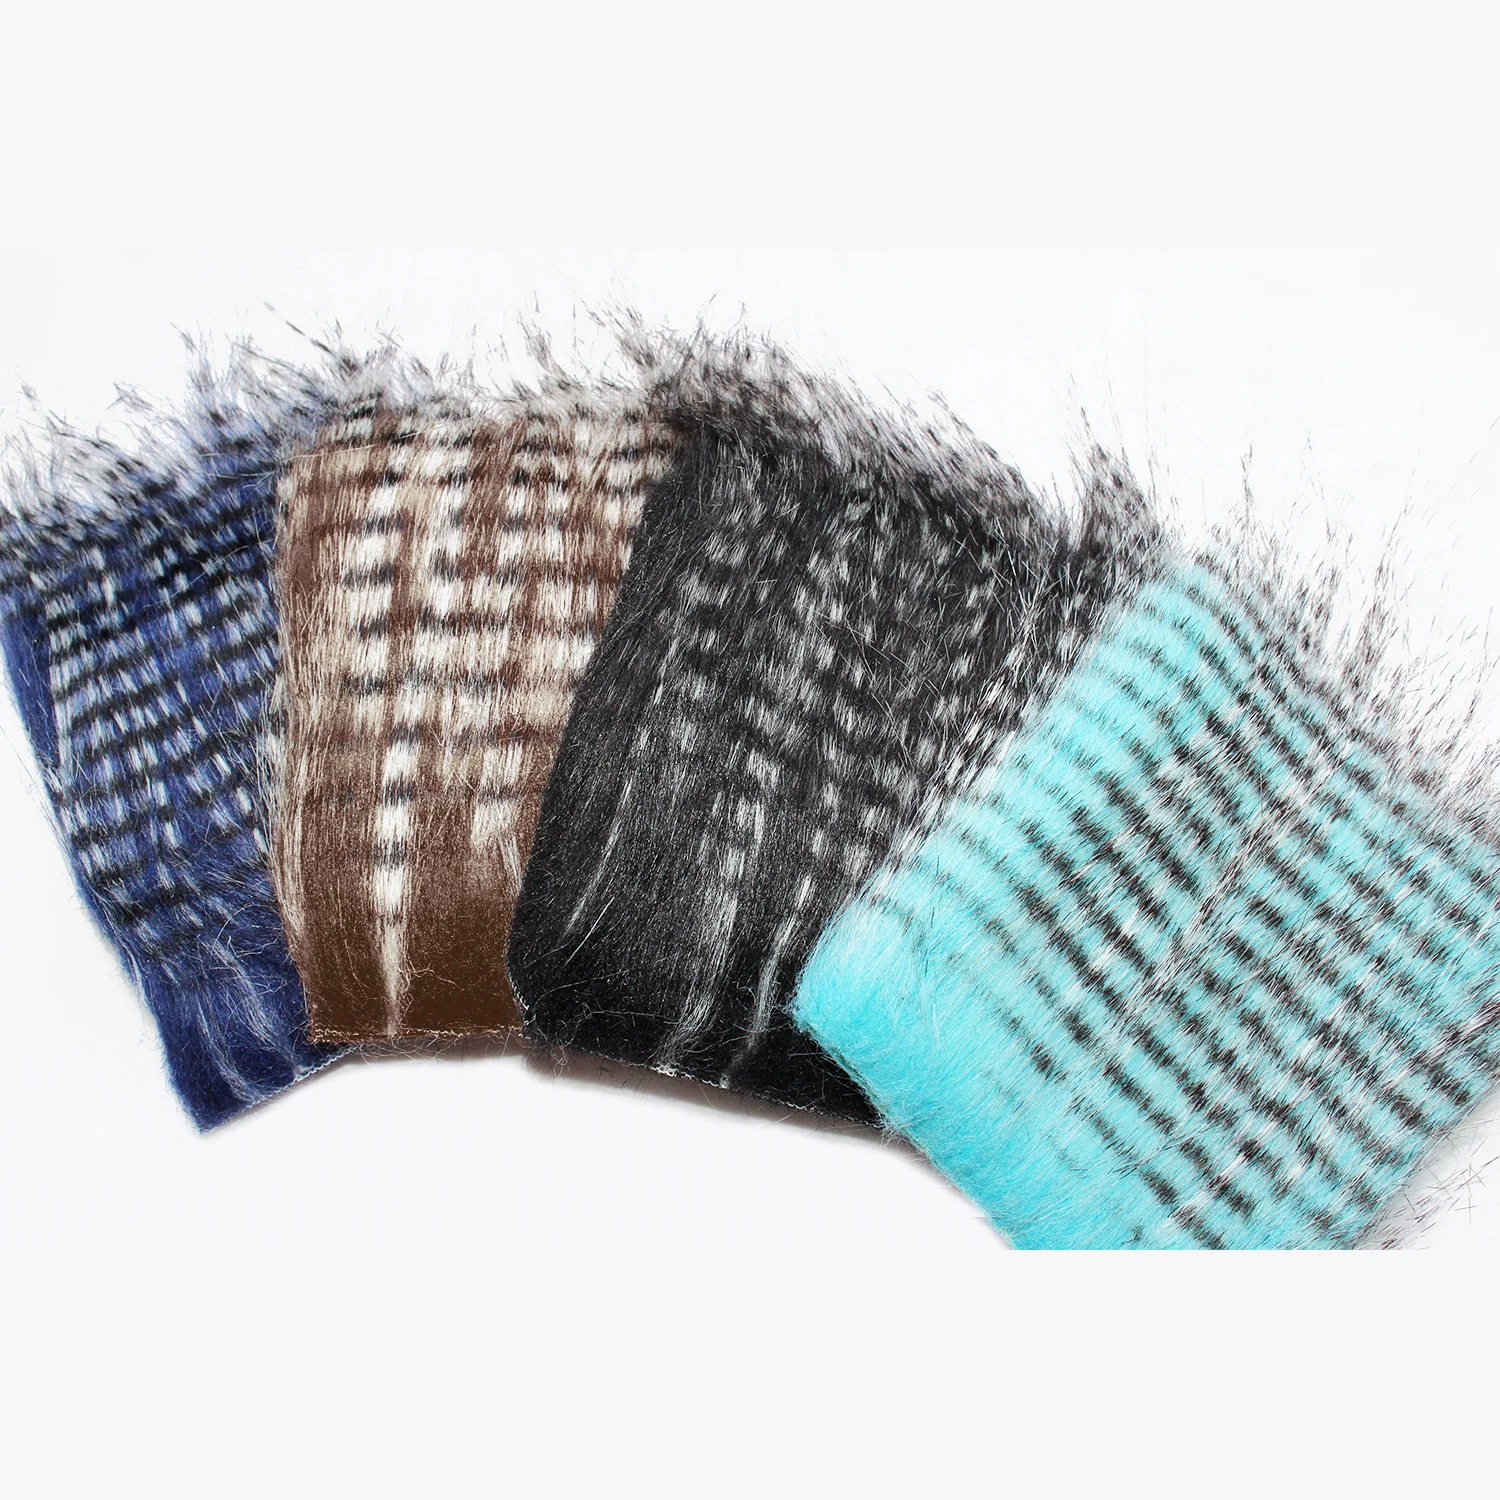 8 pcs UV Colors Furabou Long Hair Craft Fur Synthetic Fiber Fly Tying Materials 